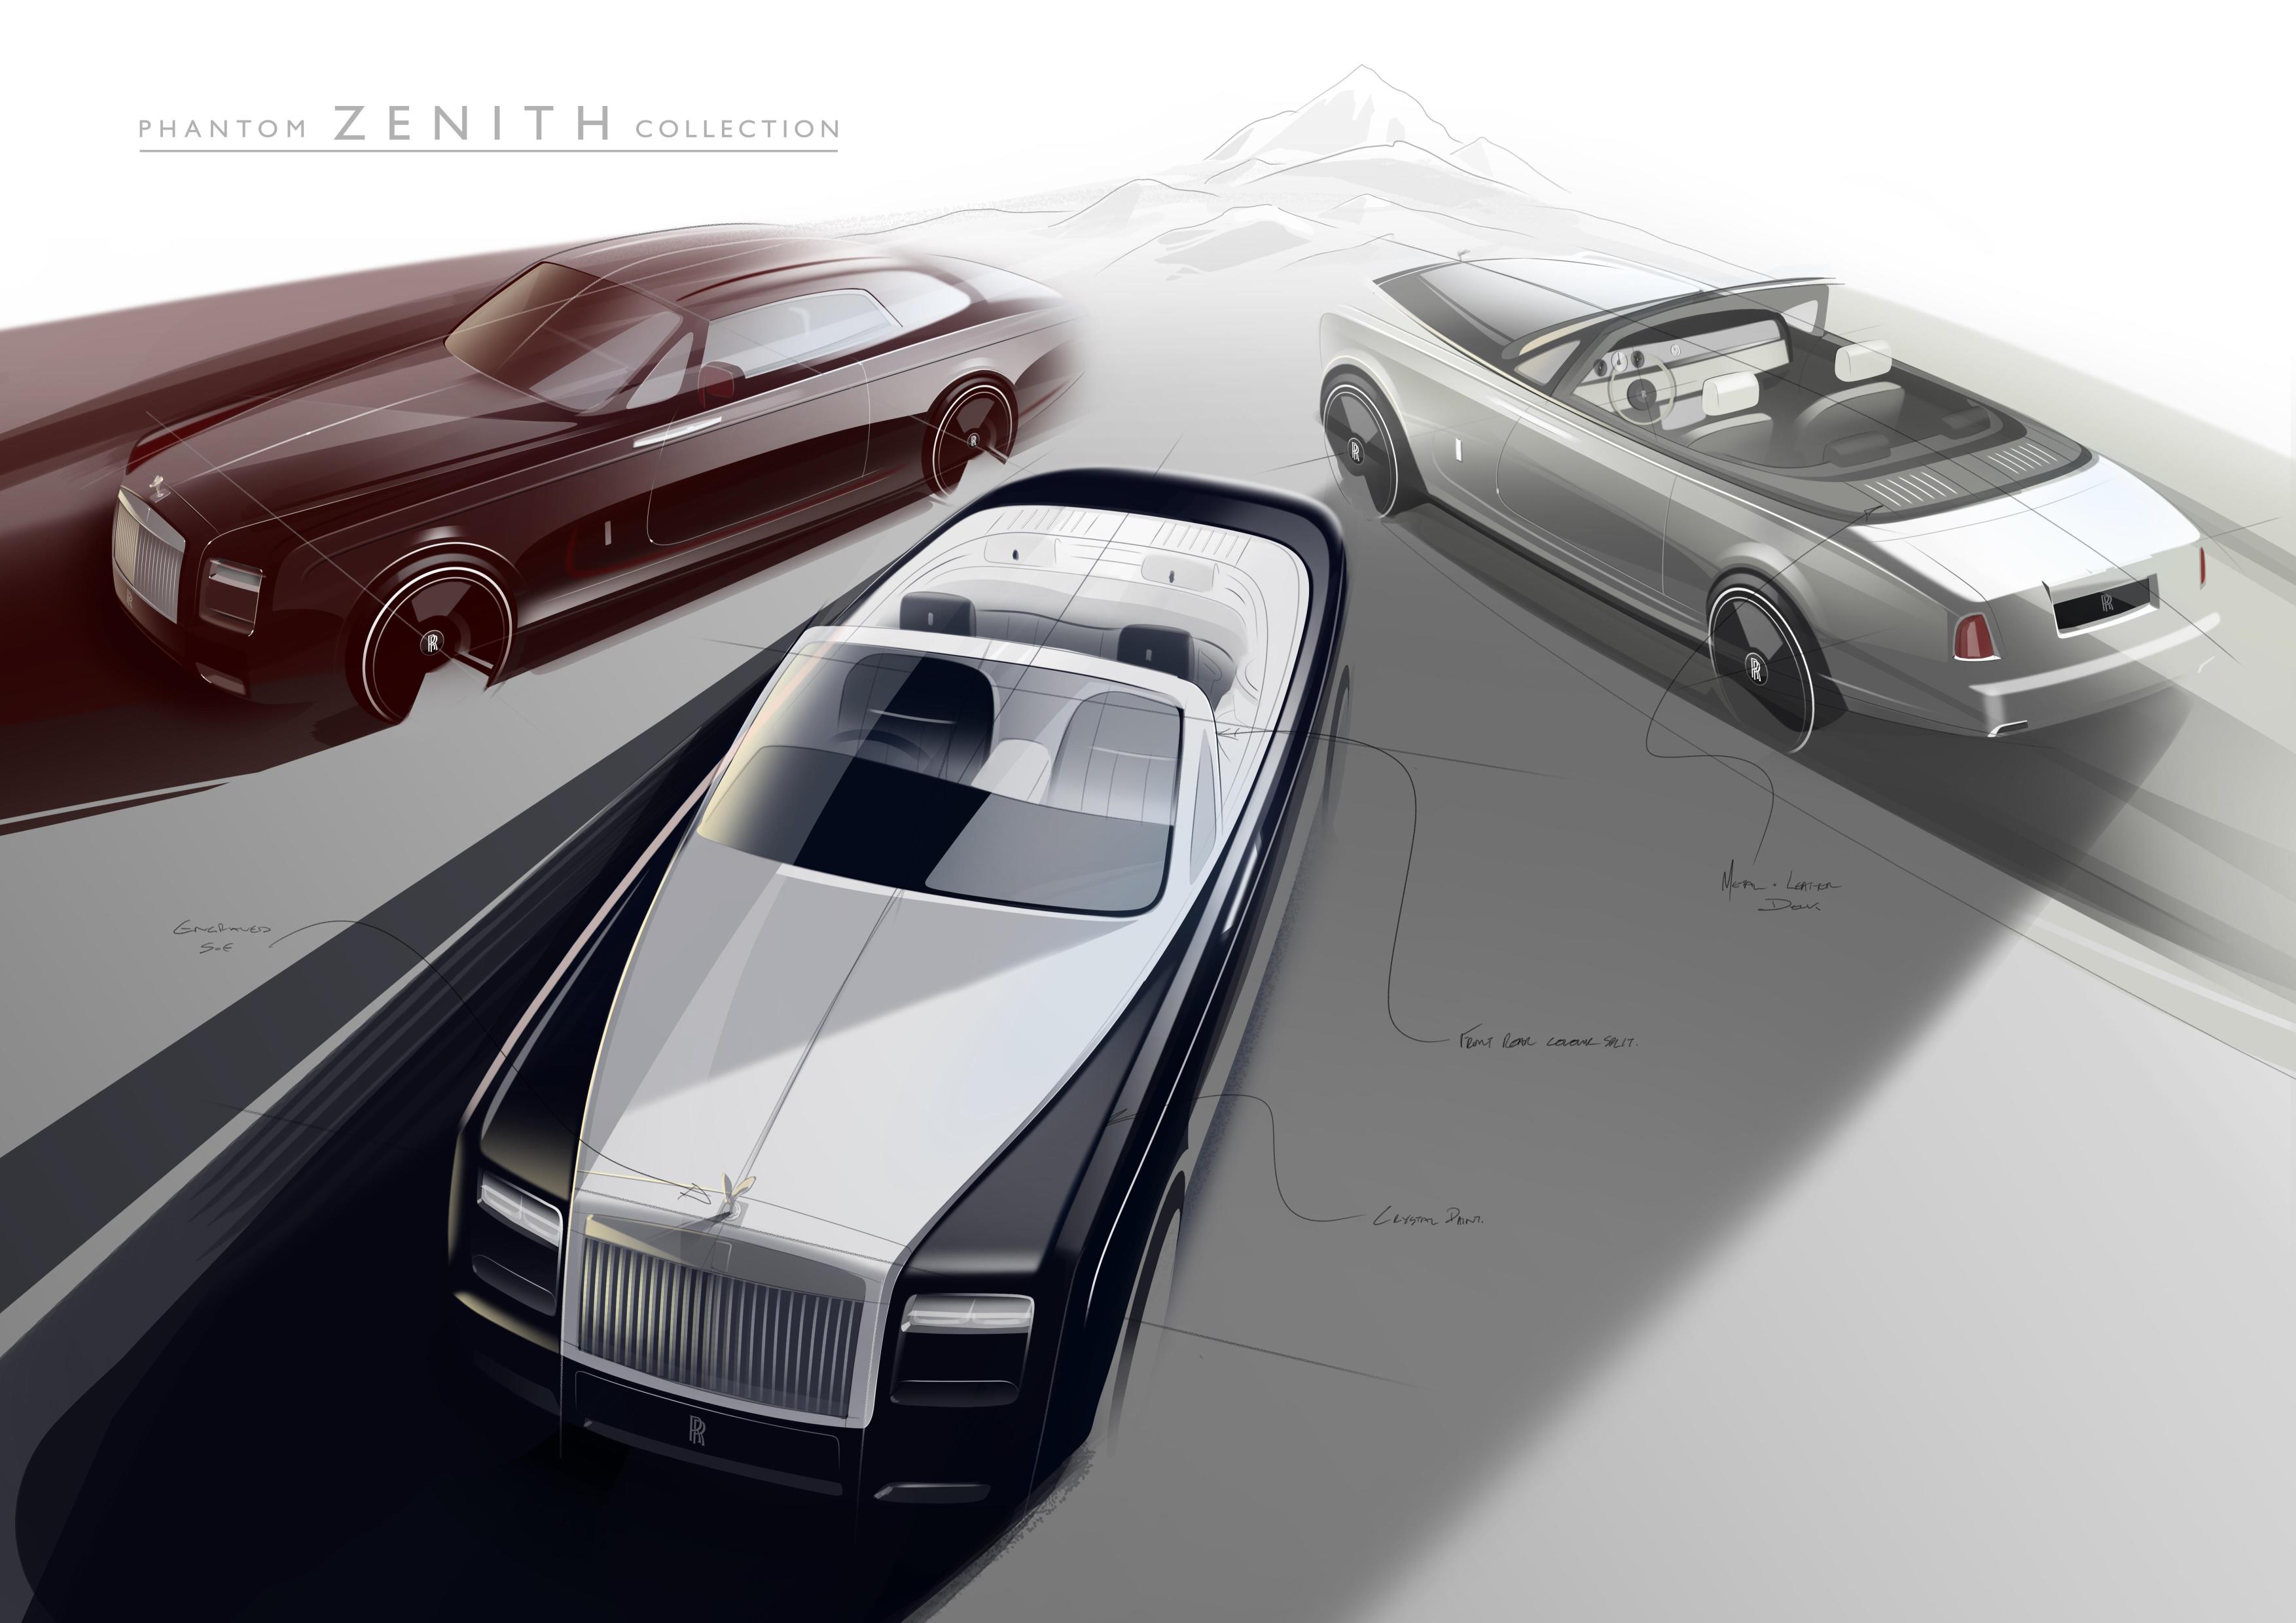 2017 Rolls Royce Phantom Zenith Collection